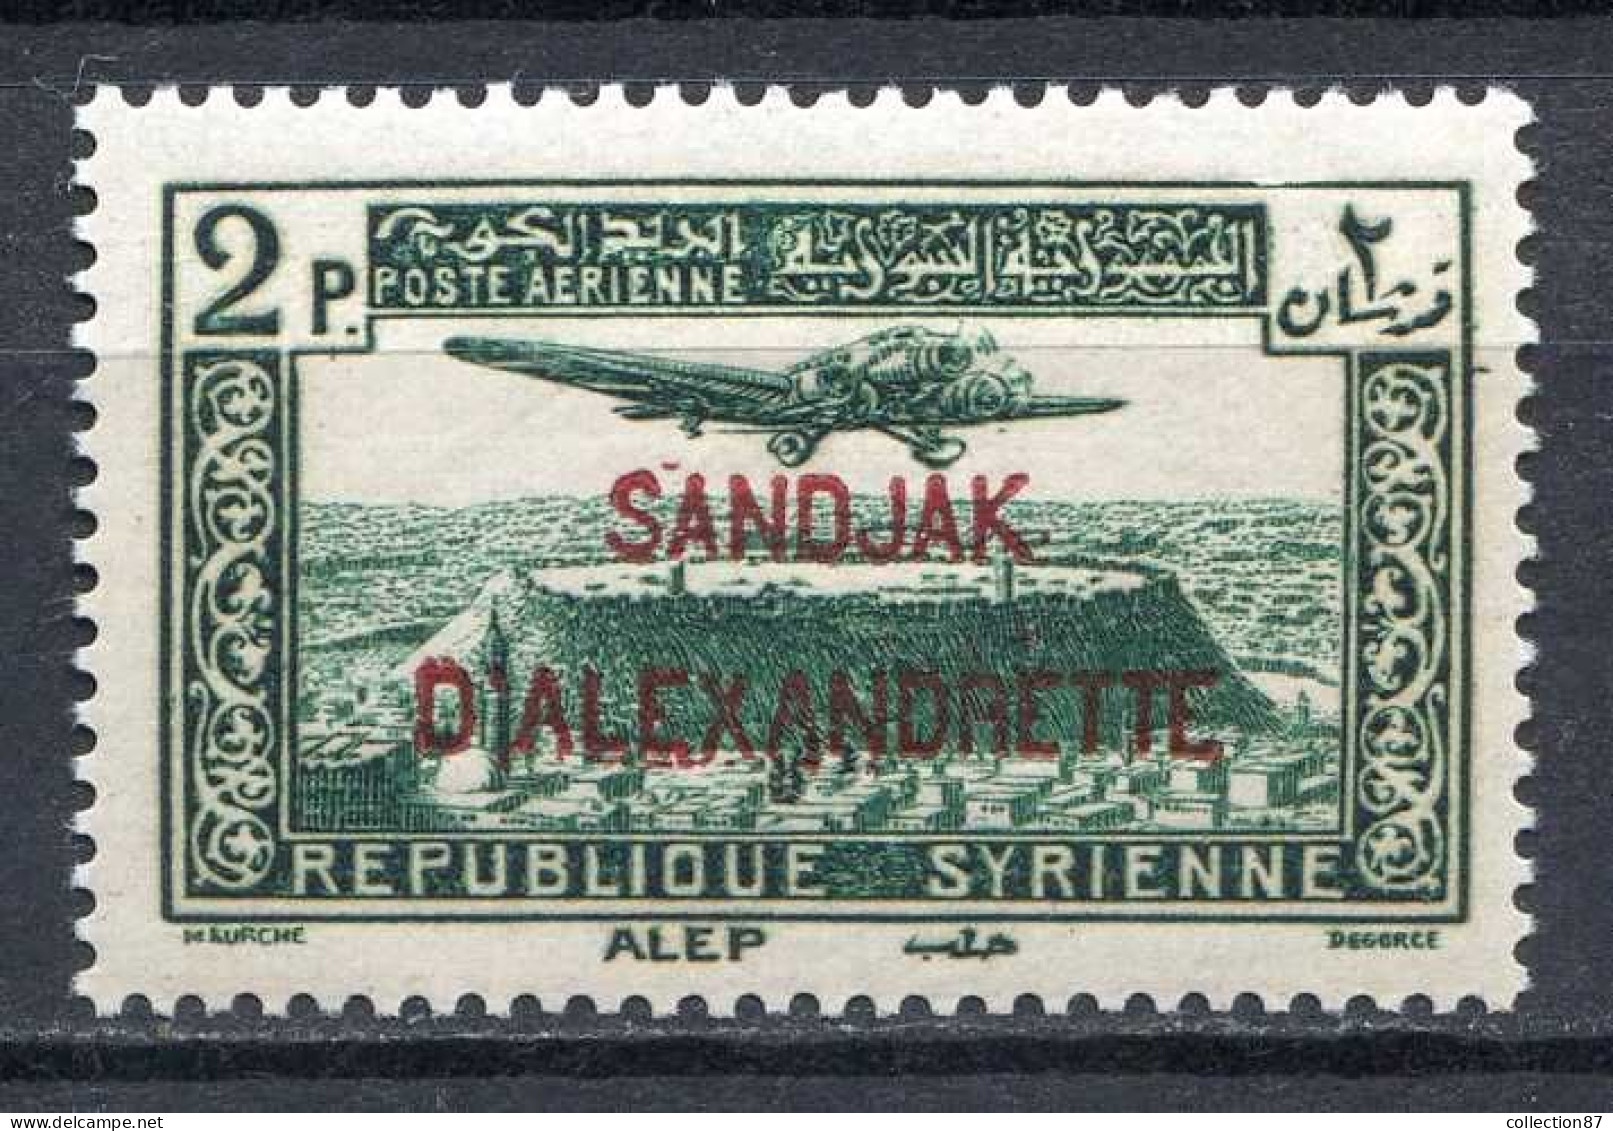 Réf 82 > ALEXANDRETTE < PA N° 3 * Neuf Ch. Infime - MH * --- > Poste Aérienne -- Aéro - Unused Stamps